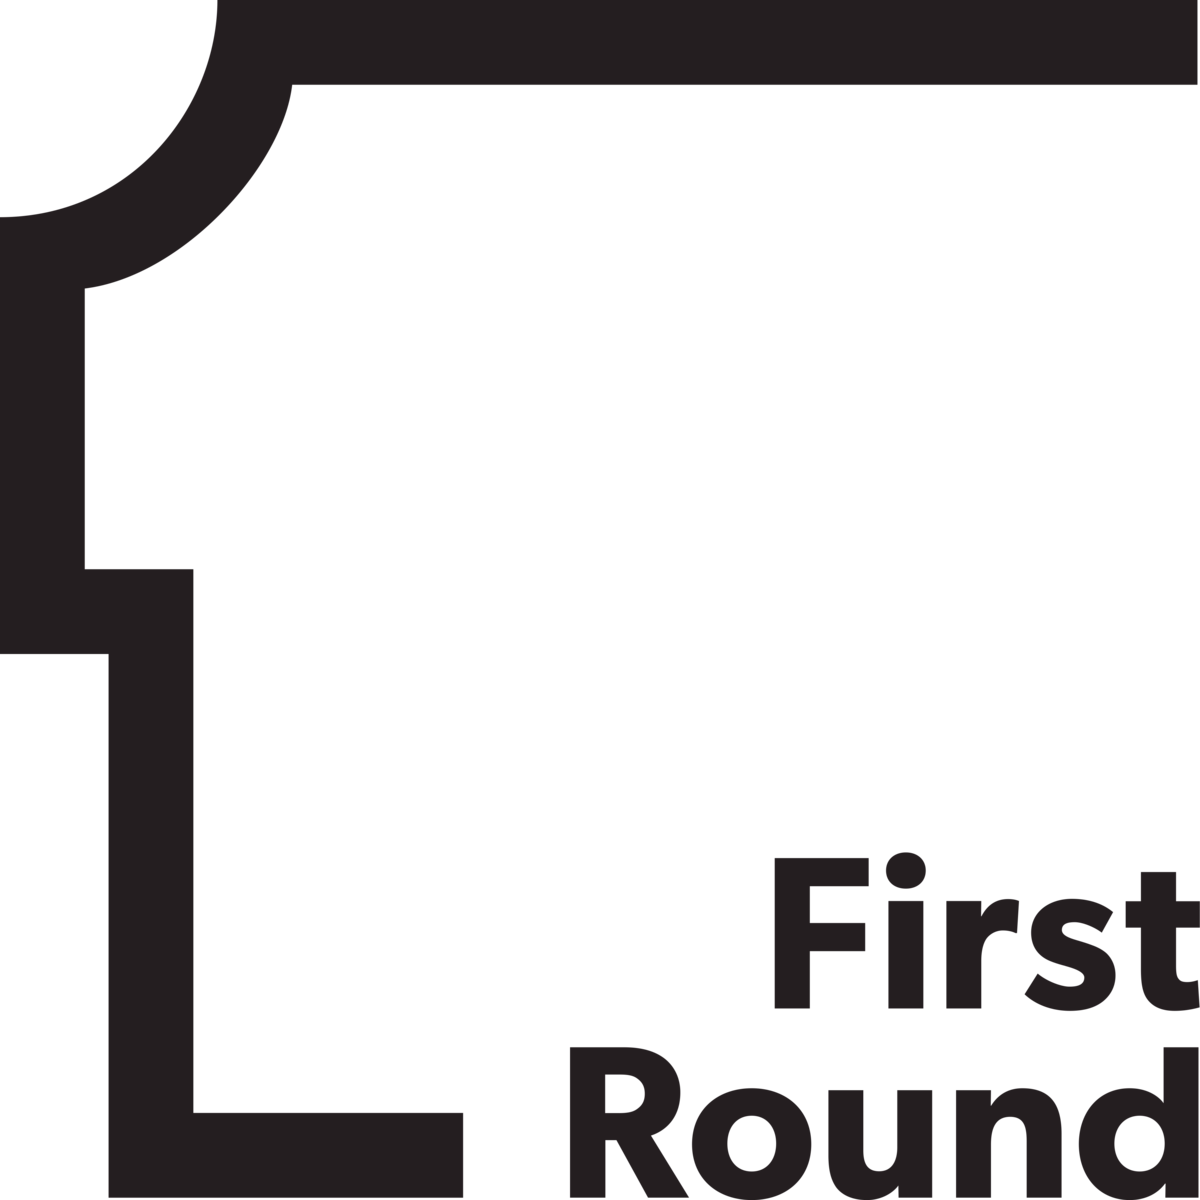 First Round Capital Logo